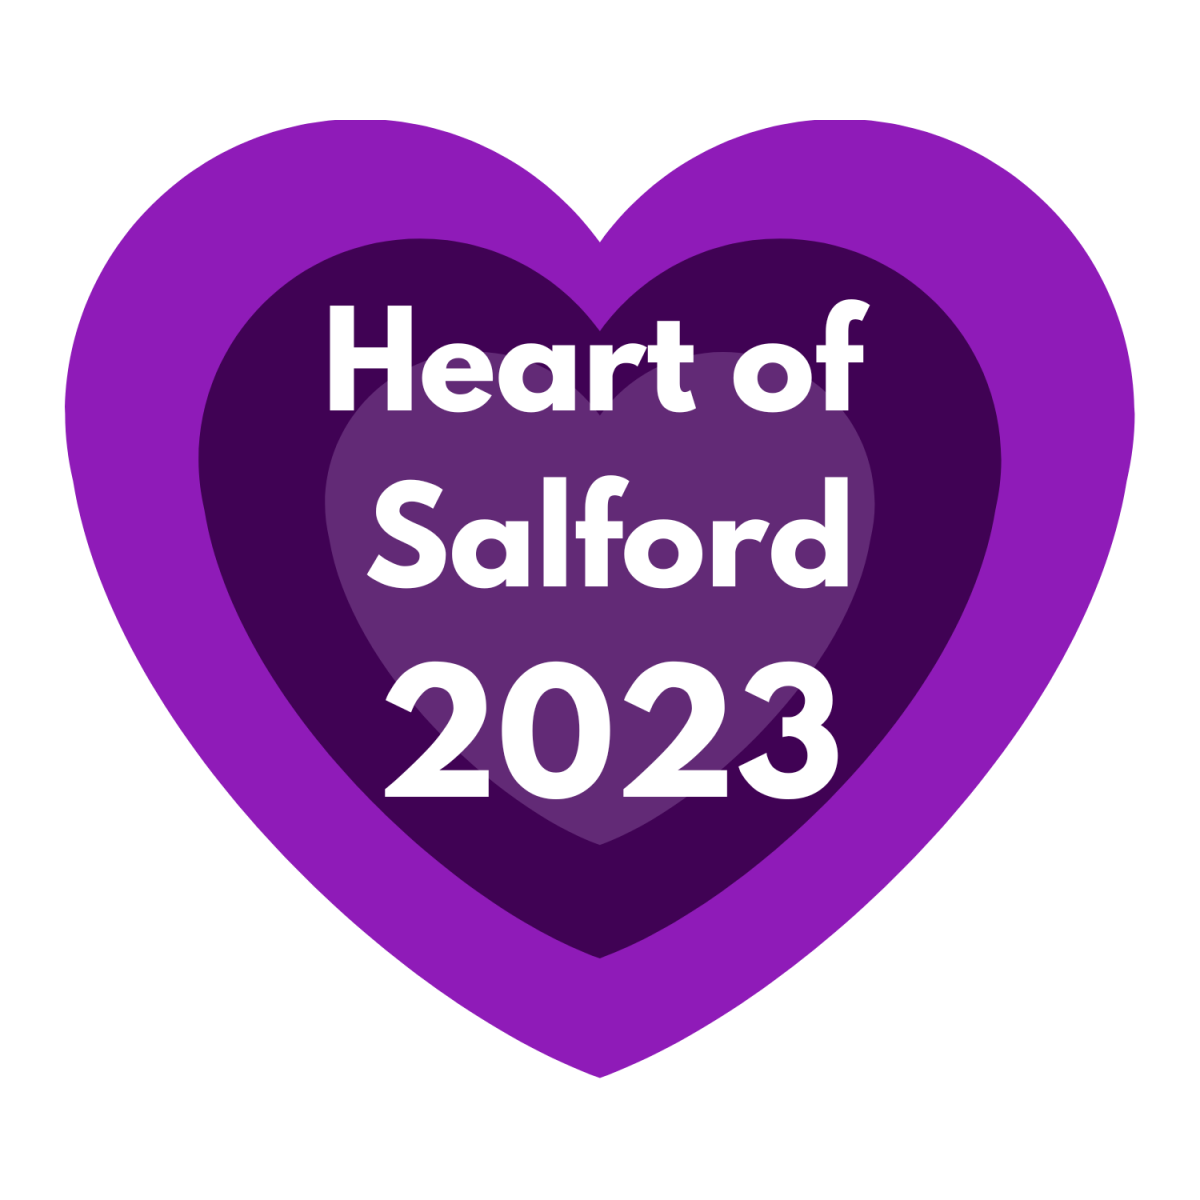 Heart of Salford logo